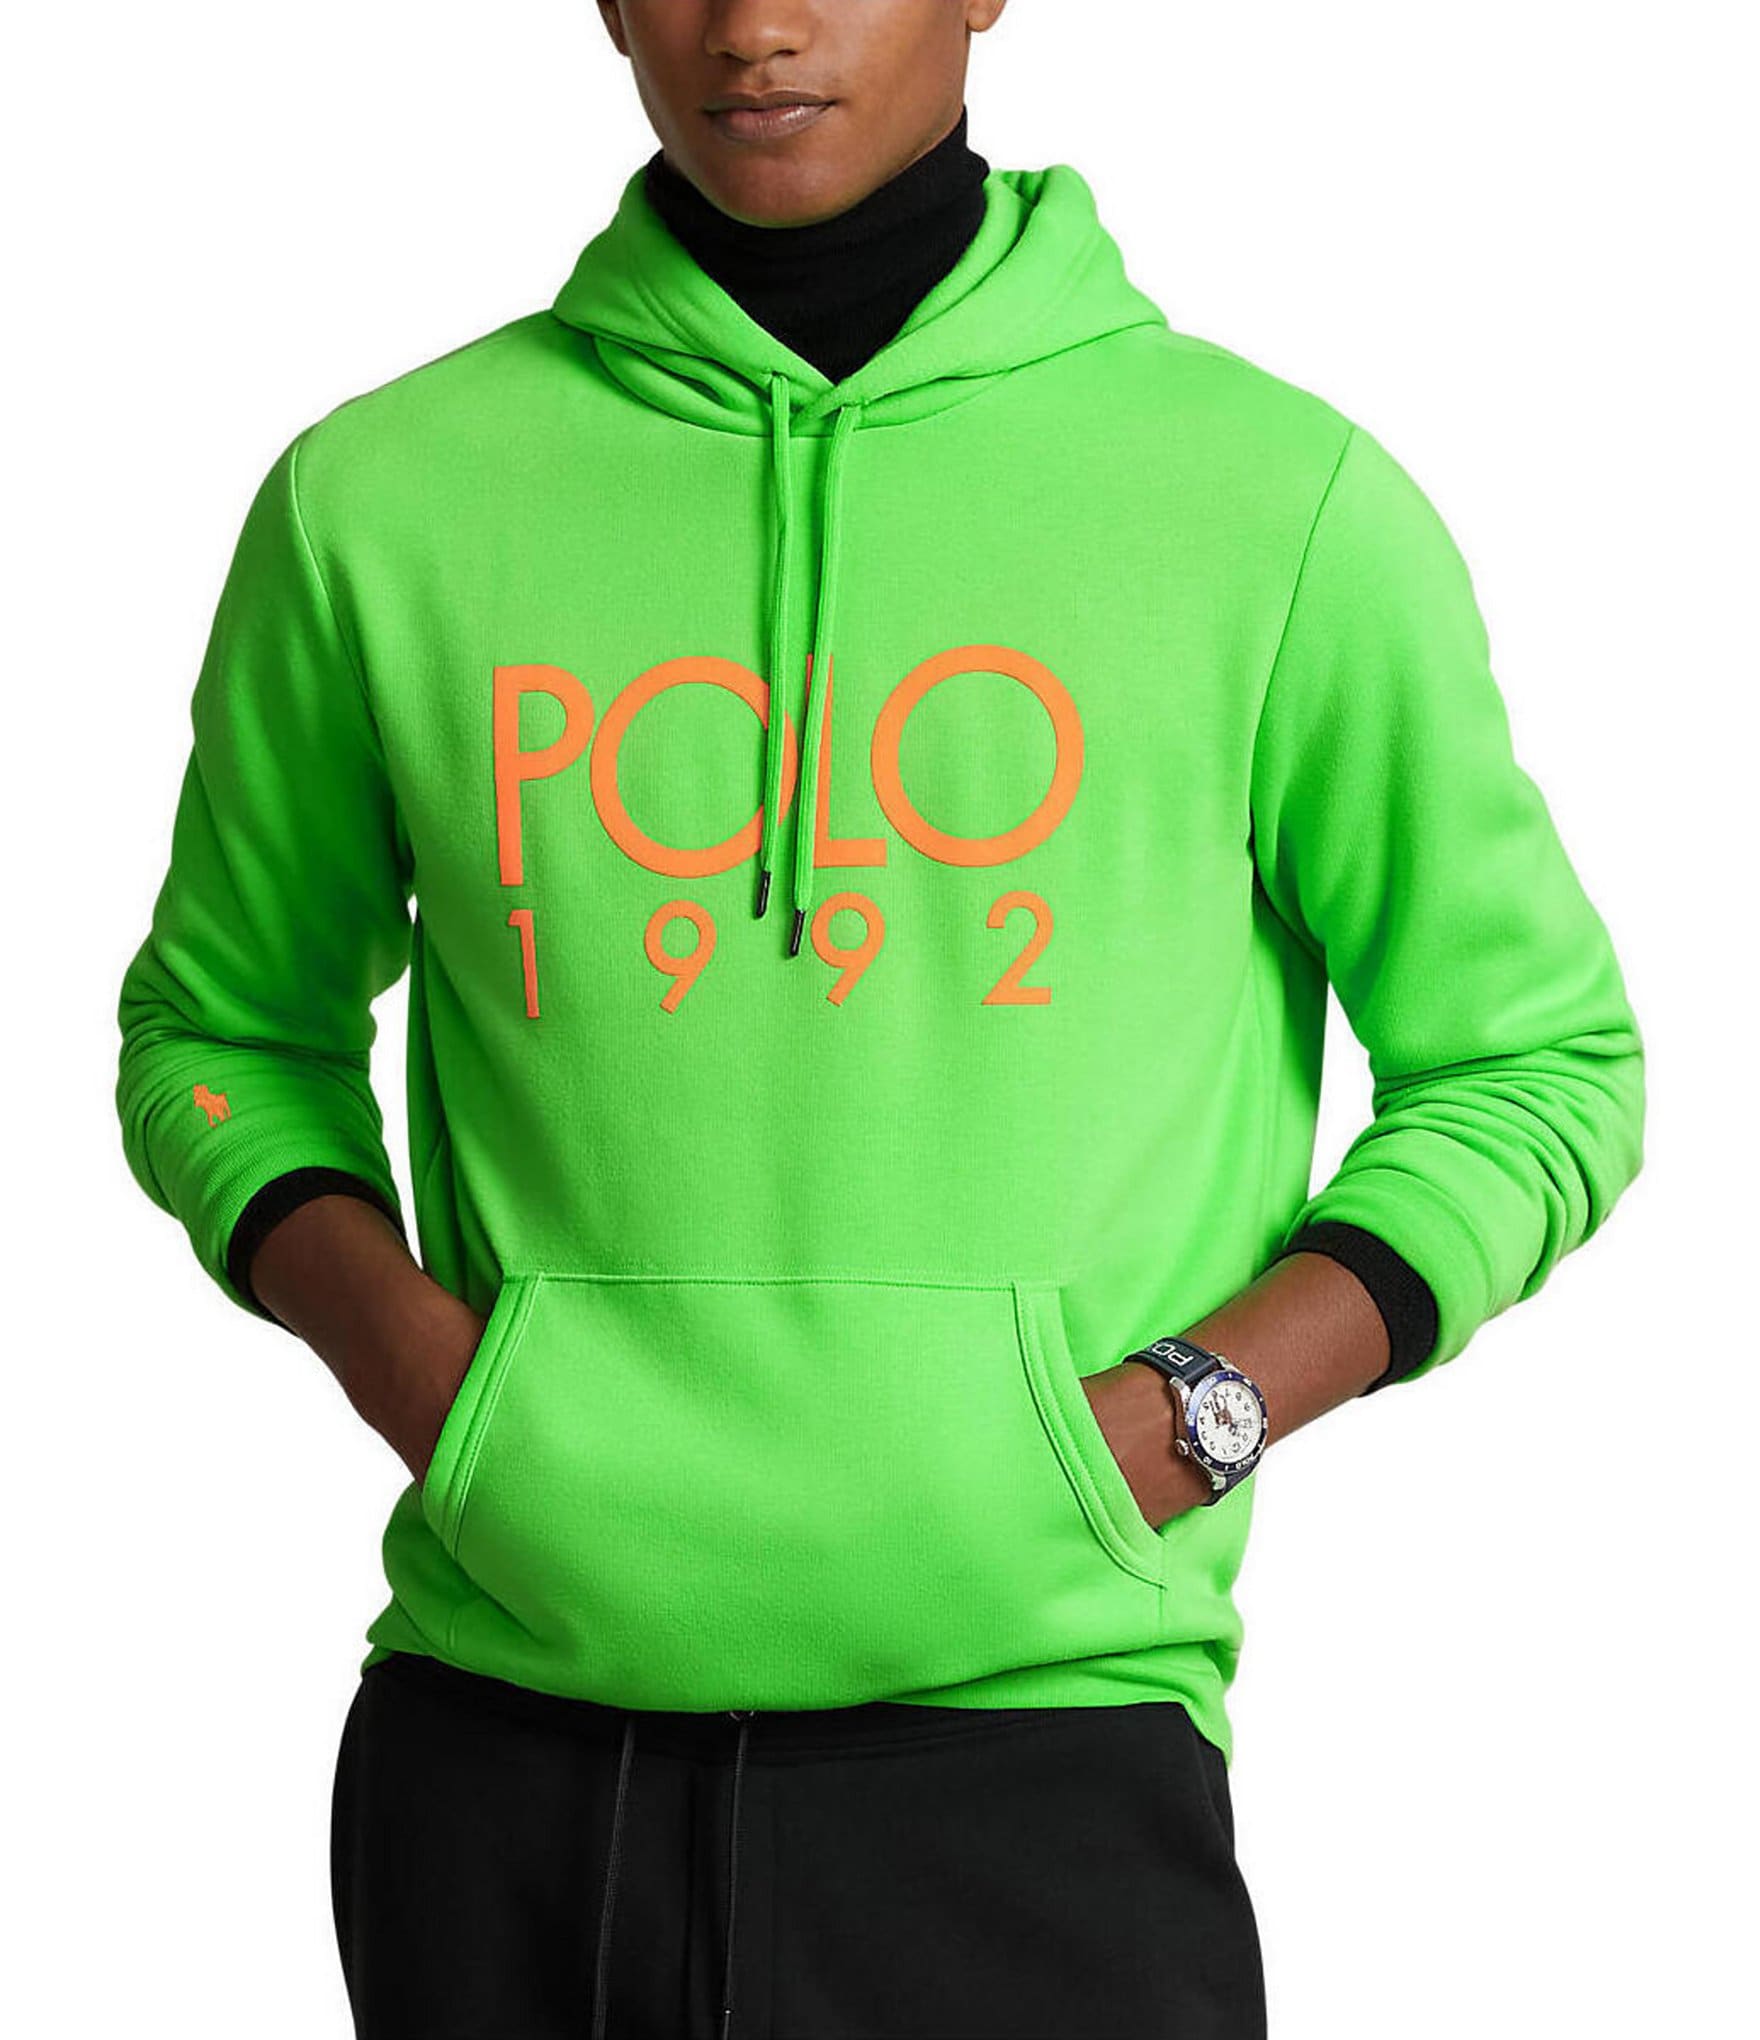 green polo: Men's Hoodies & Sweatshirts